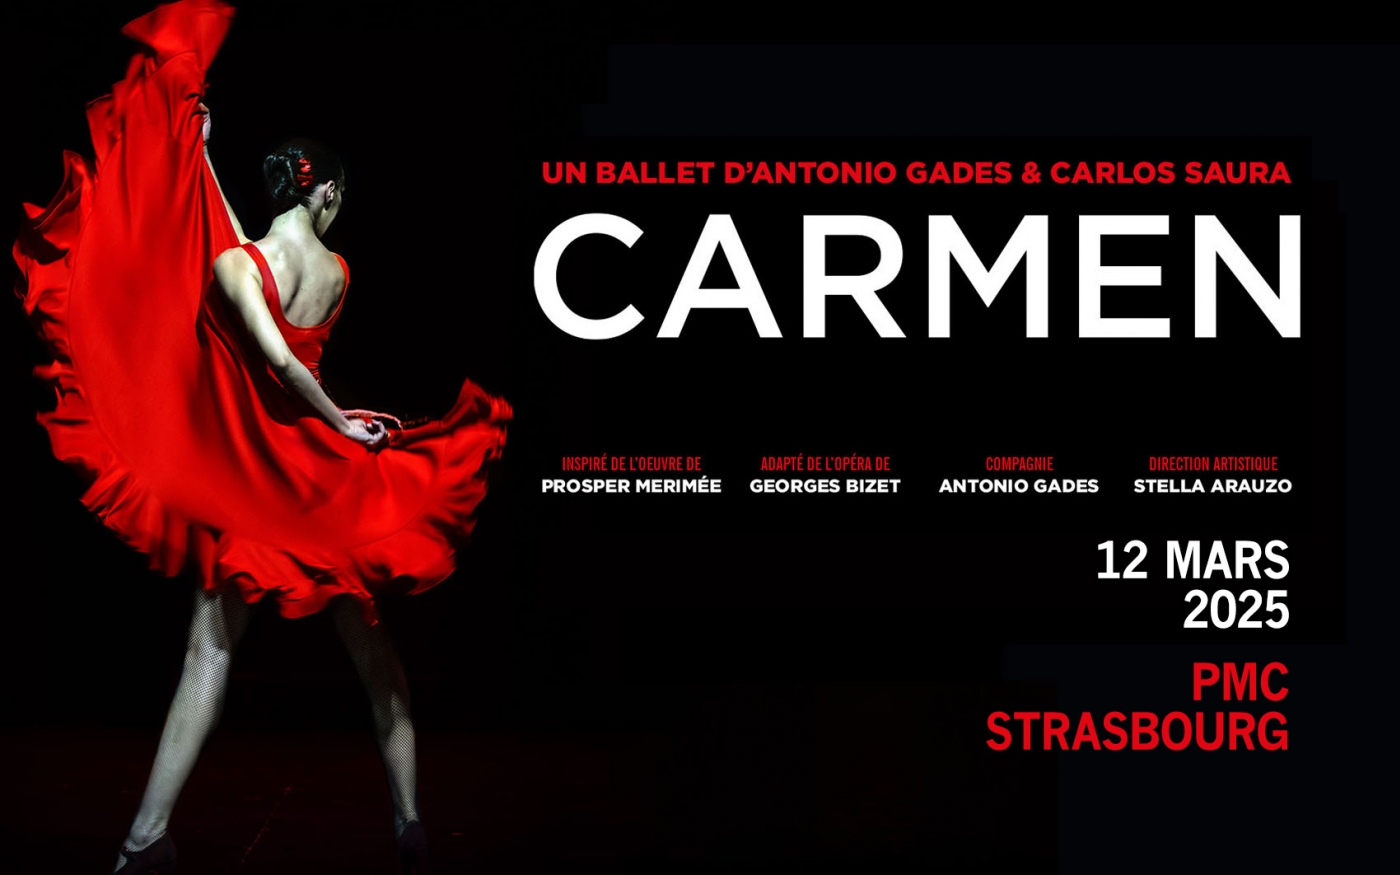 Carmen - 